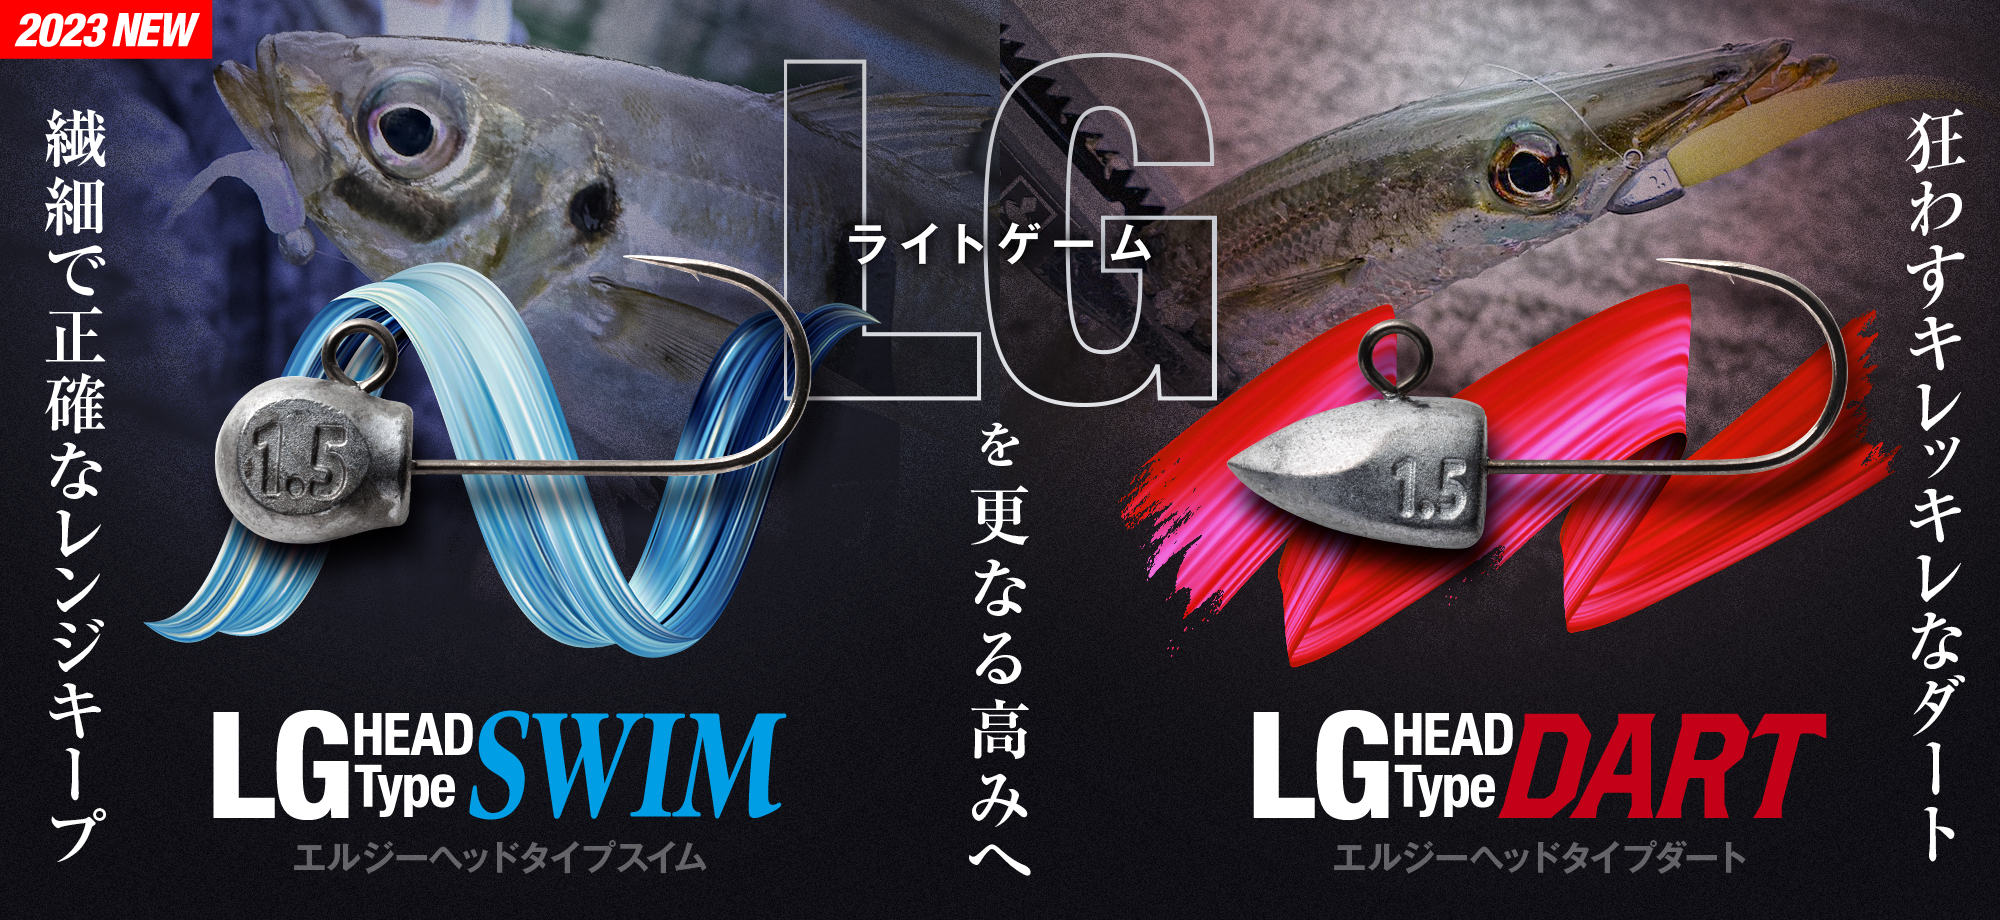 LG HEAD Type SWIM/DART